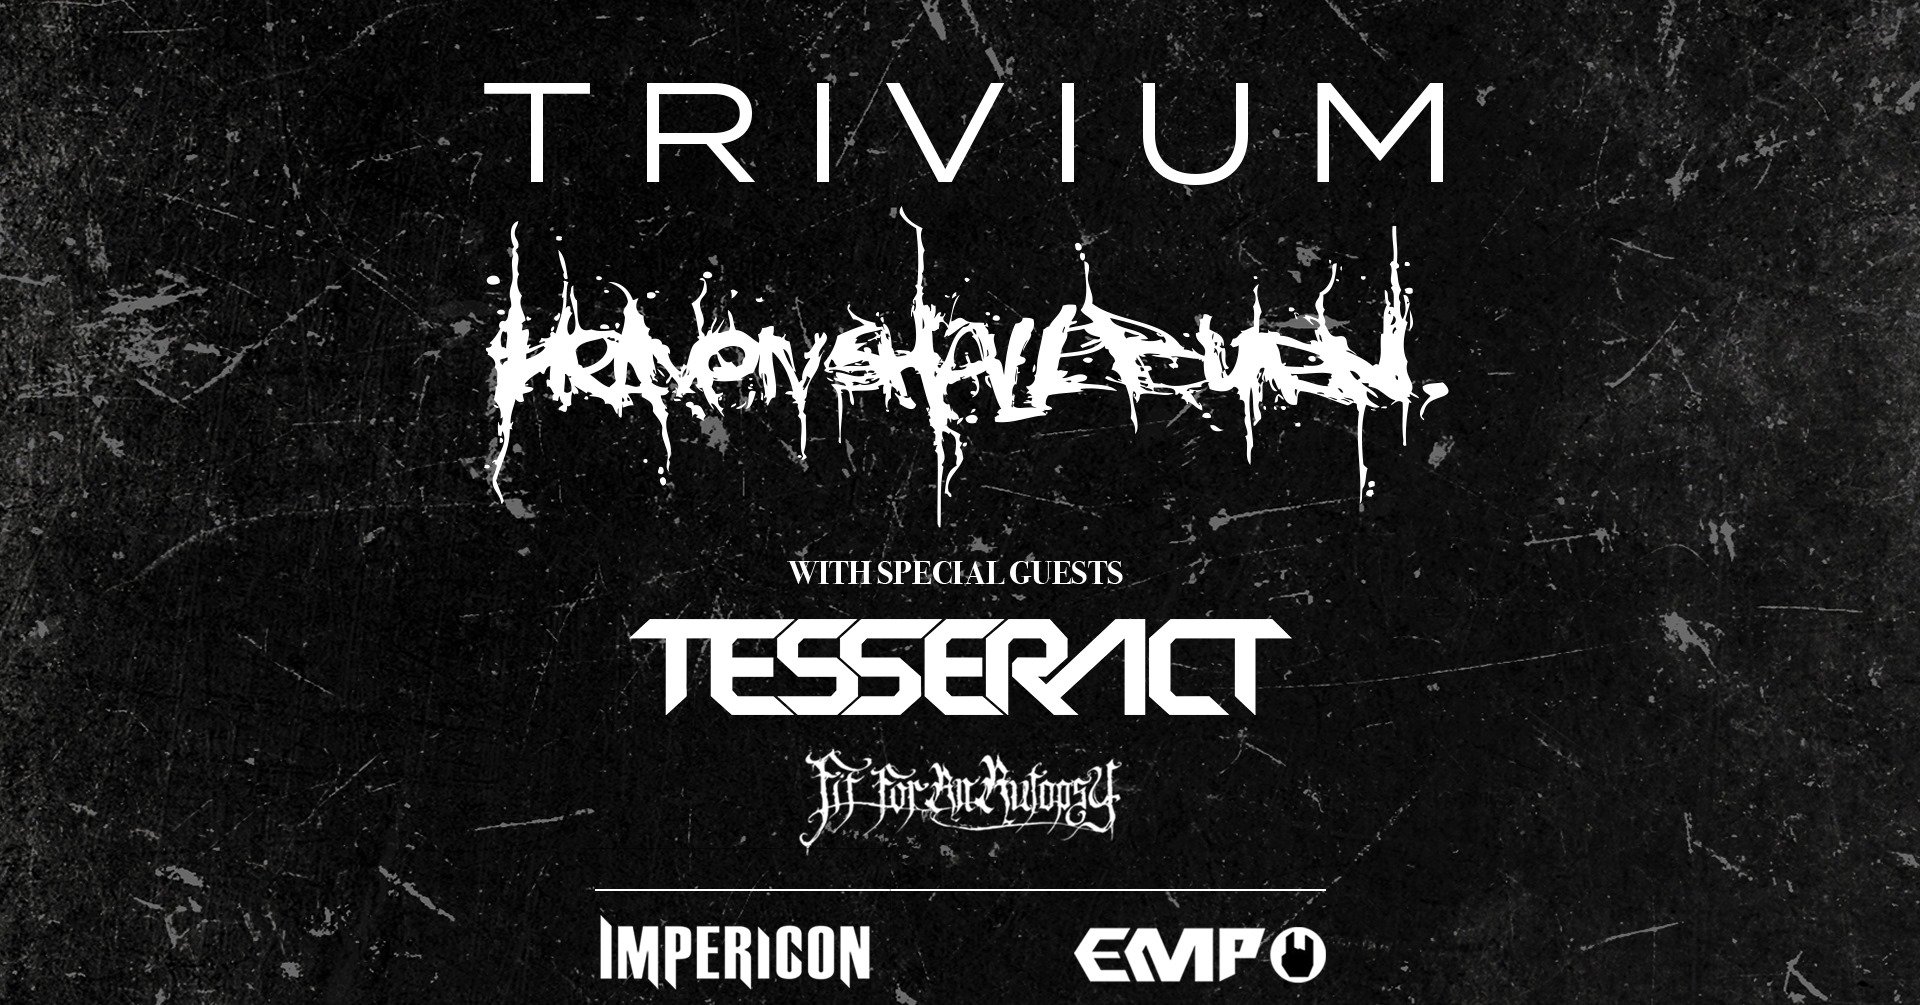 trivium heaven shall burn tour